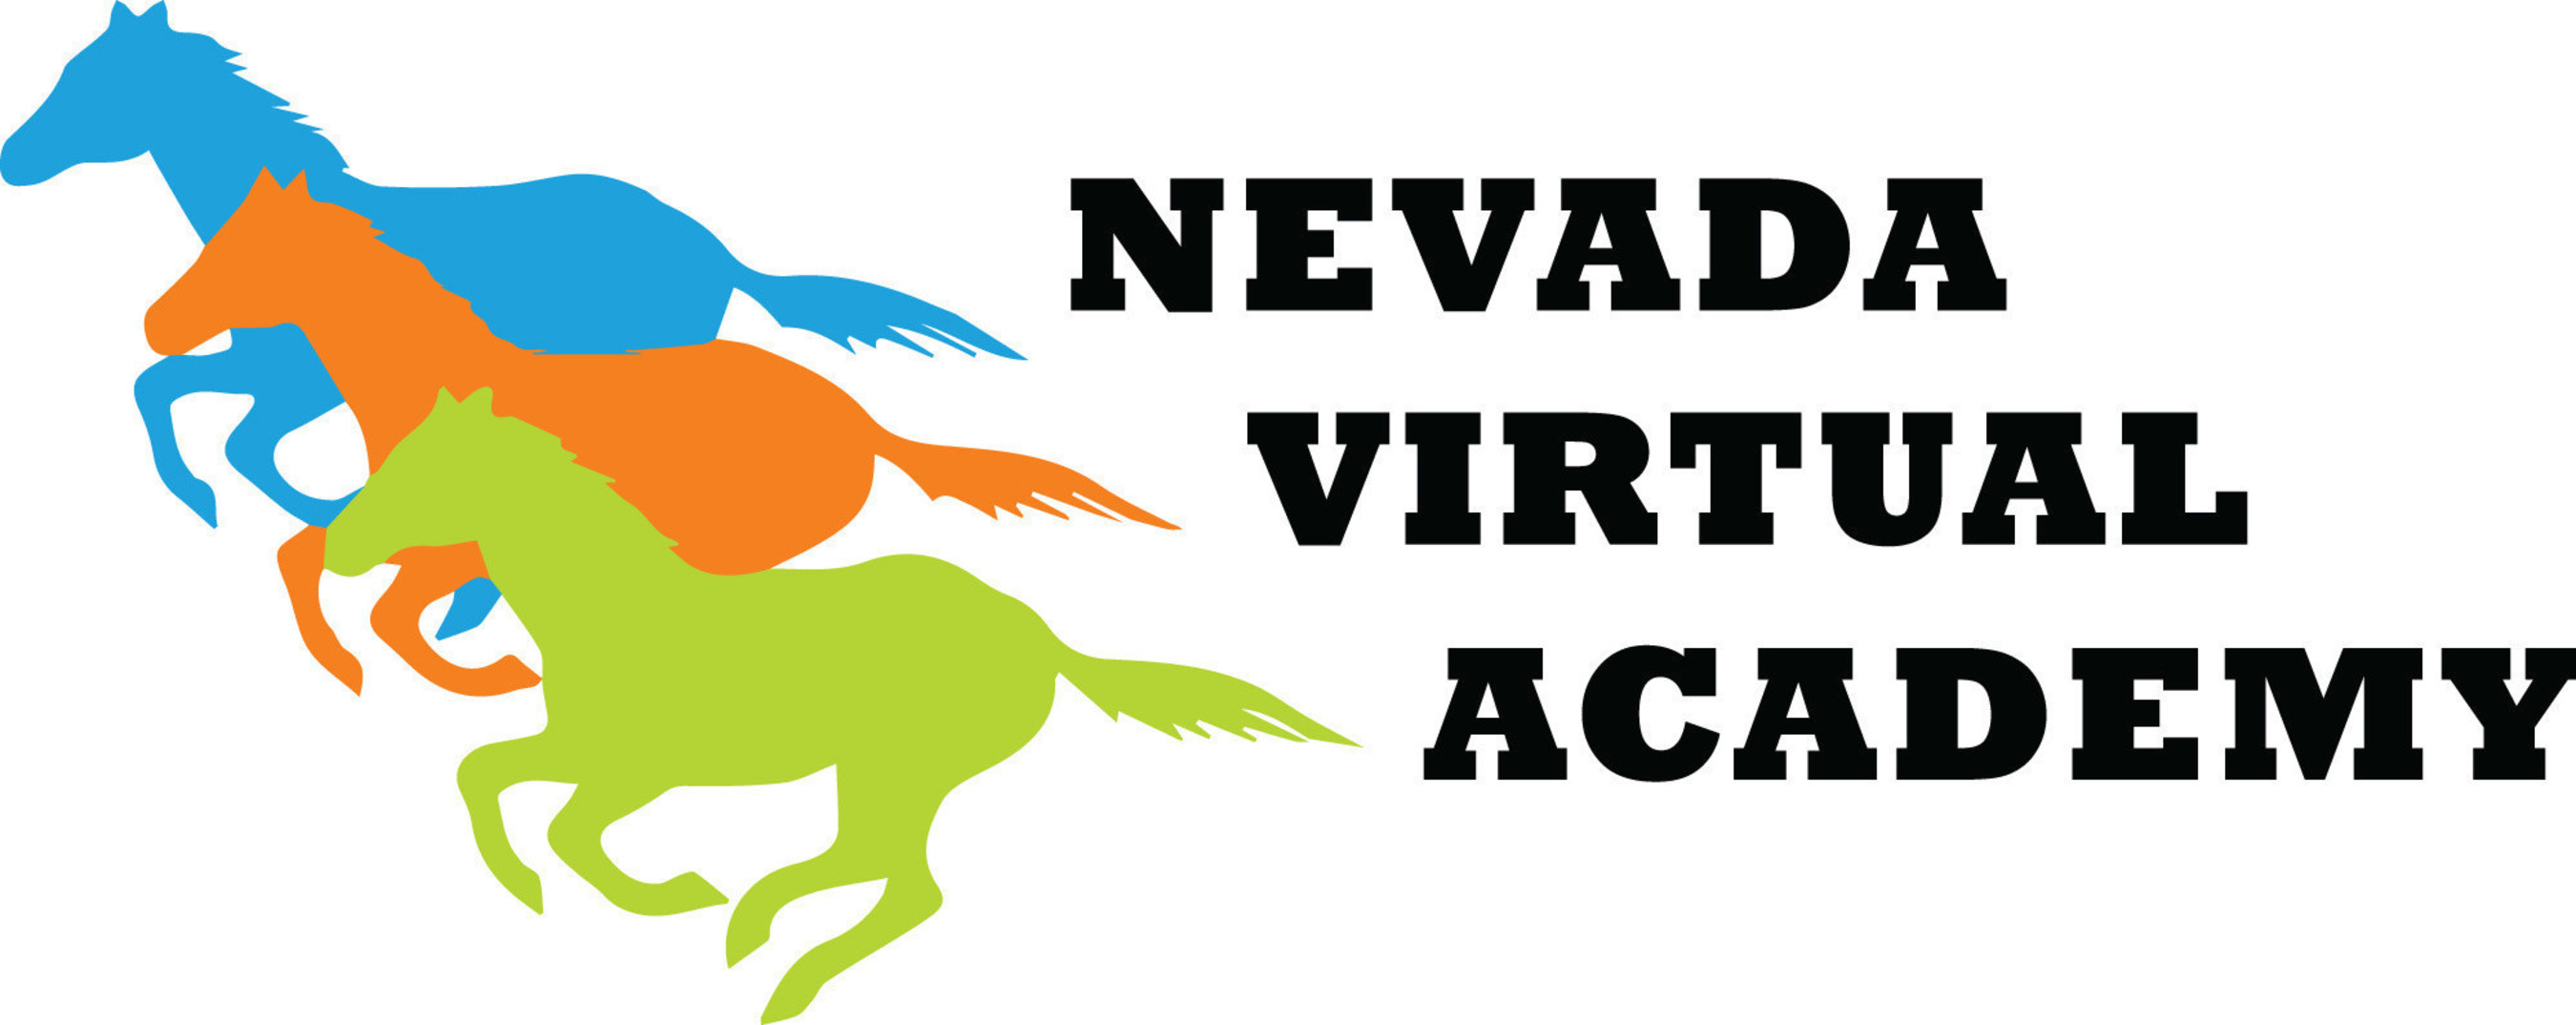 Nevada Virtual Academy